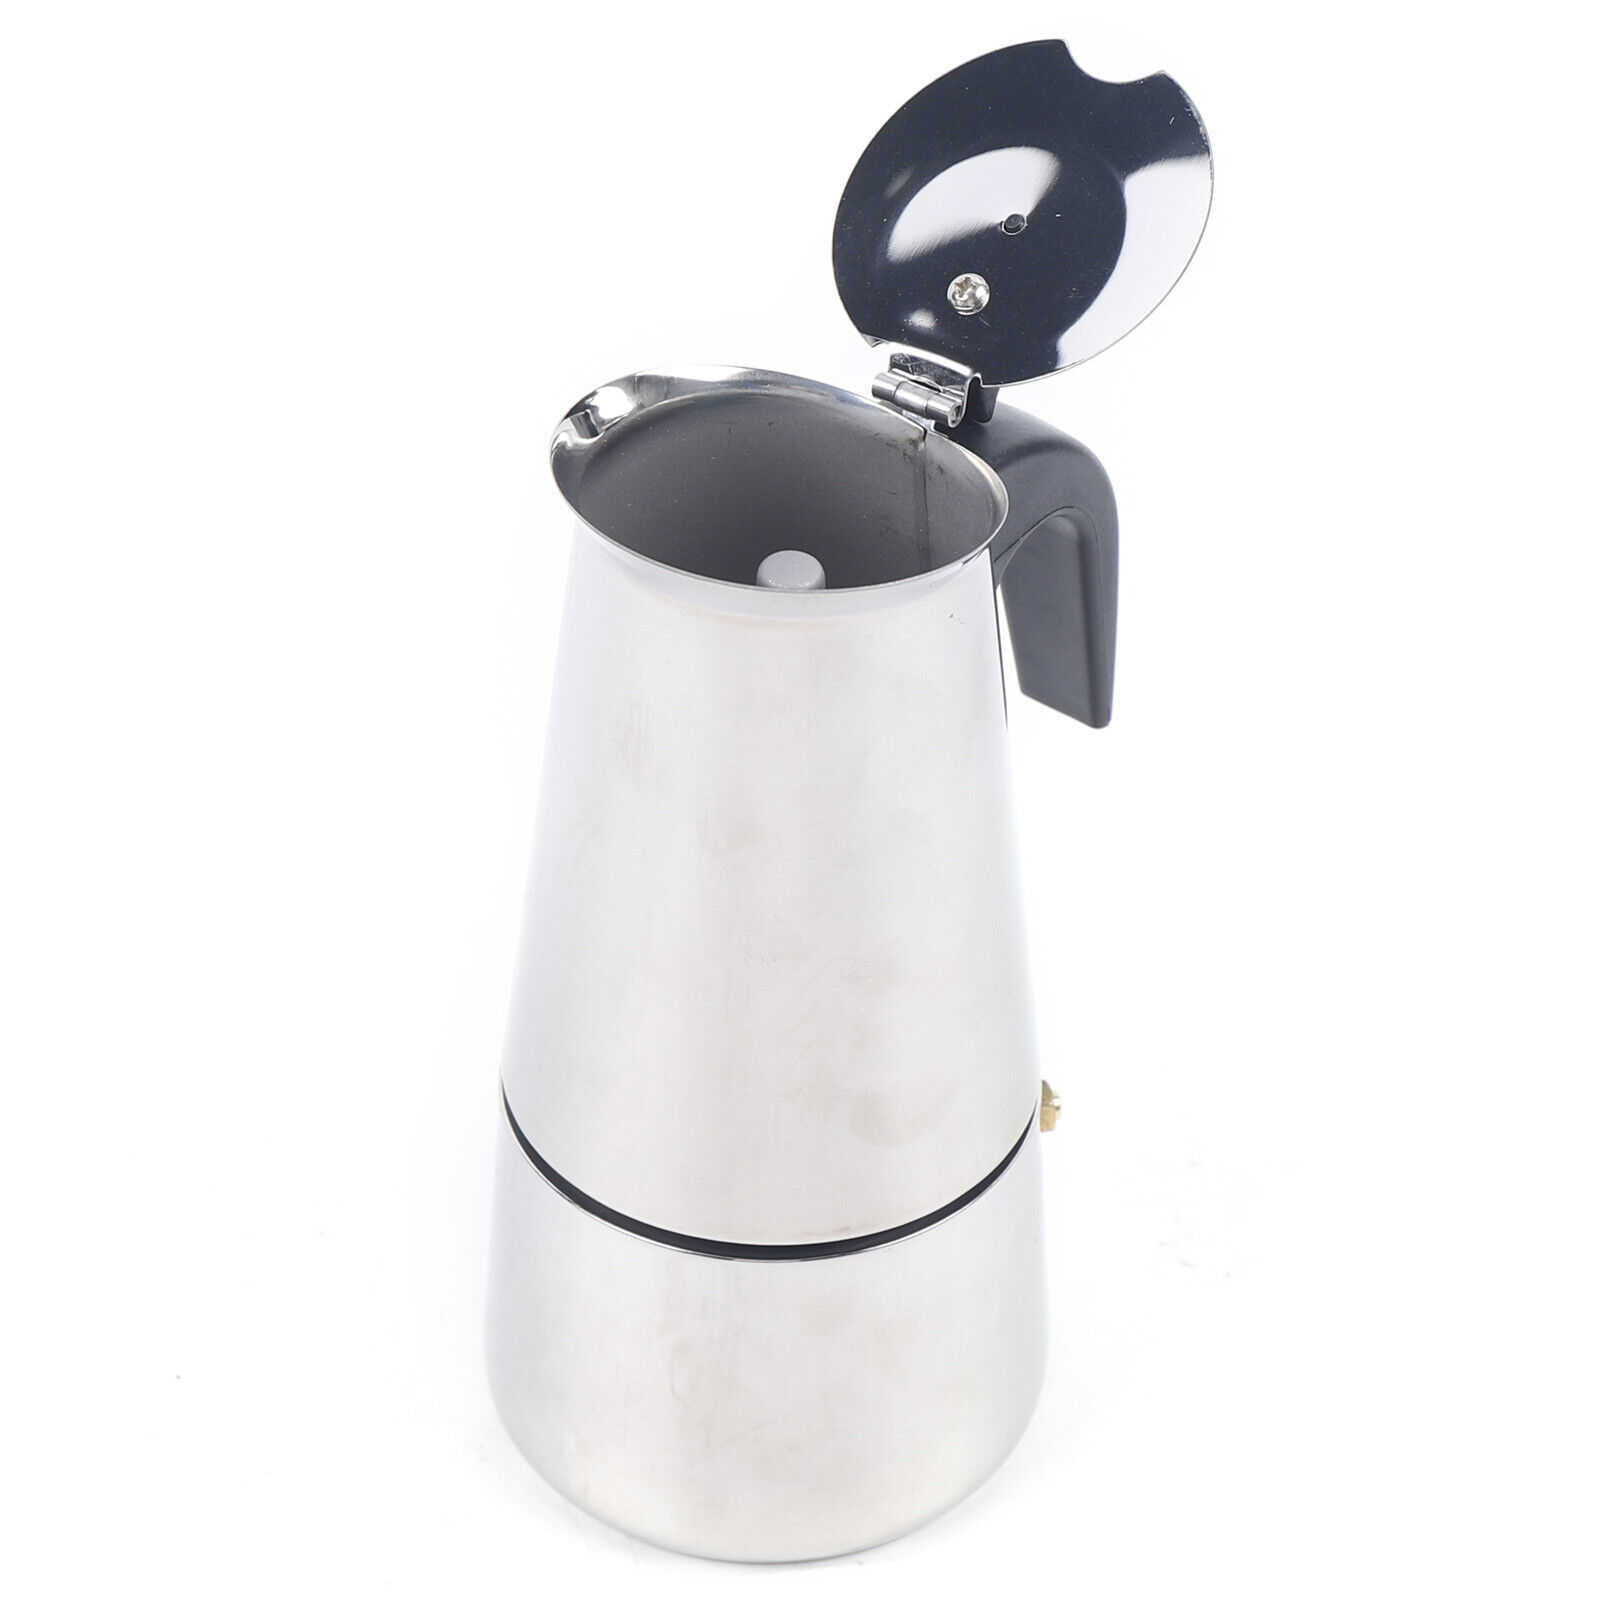 110V Stovetop Moka Pot Espresso Coffee Maker Stovetop 6 Cups 300ml Stainless NEW Unbranded Espresso Maker - фотография #9